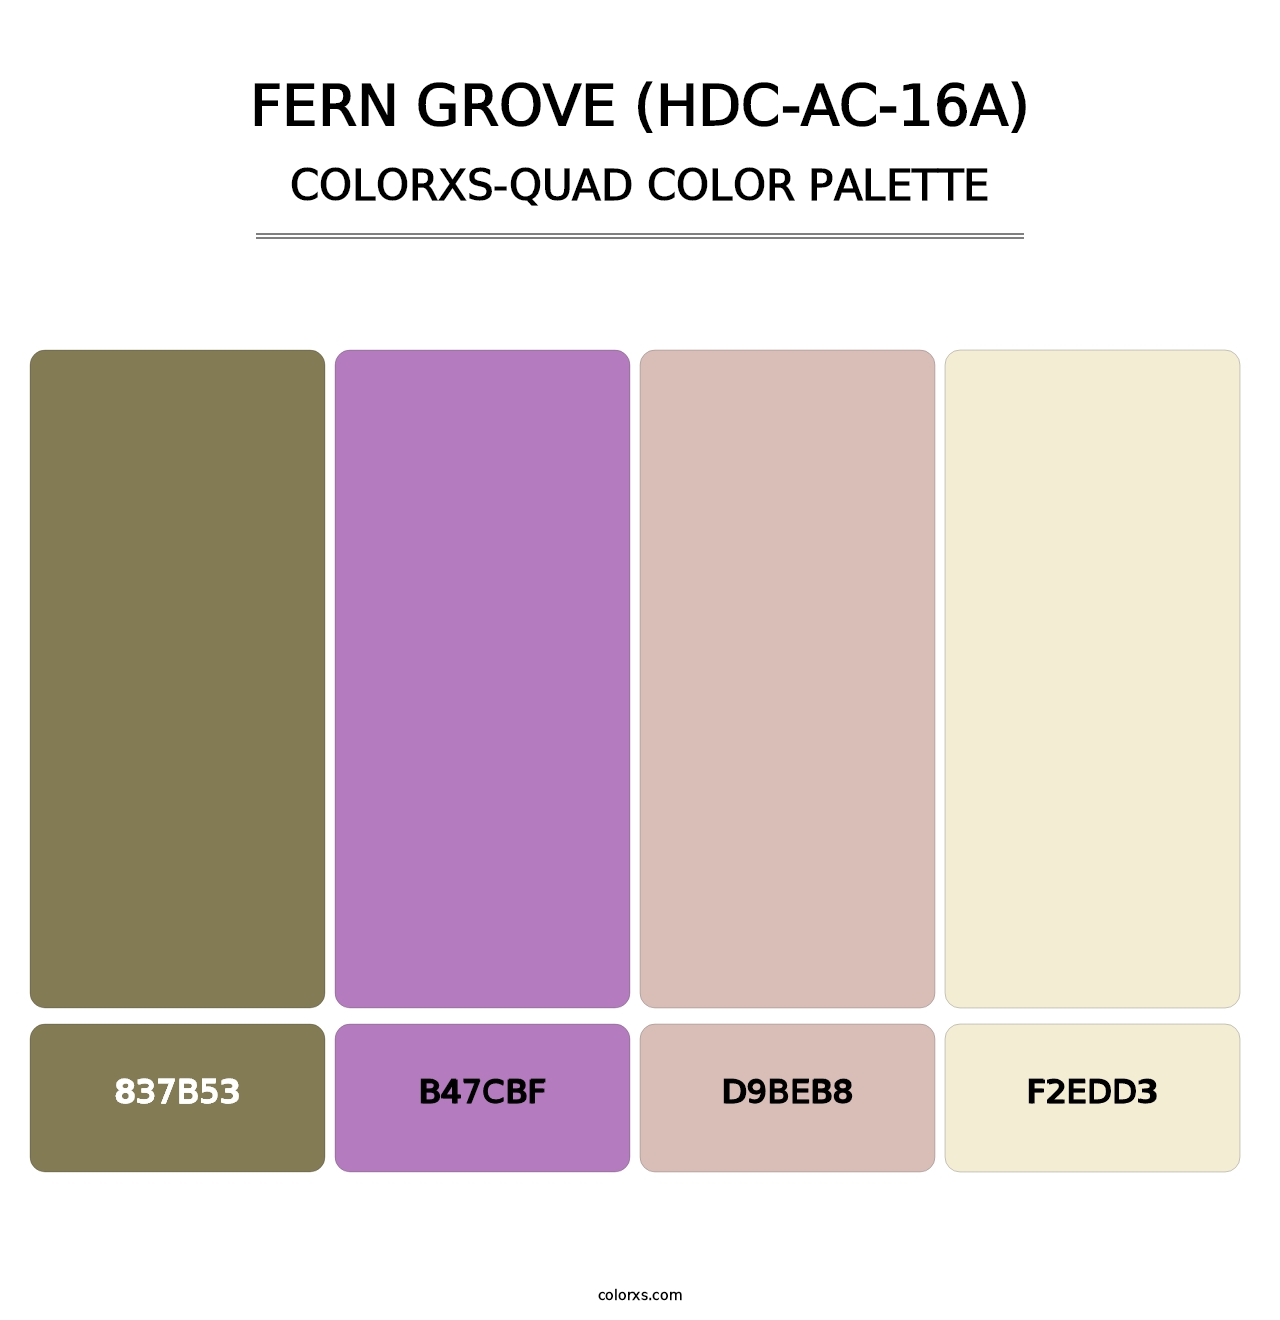 Fern Grove (HDC-AC-16A) - Colorxs Quad Palette